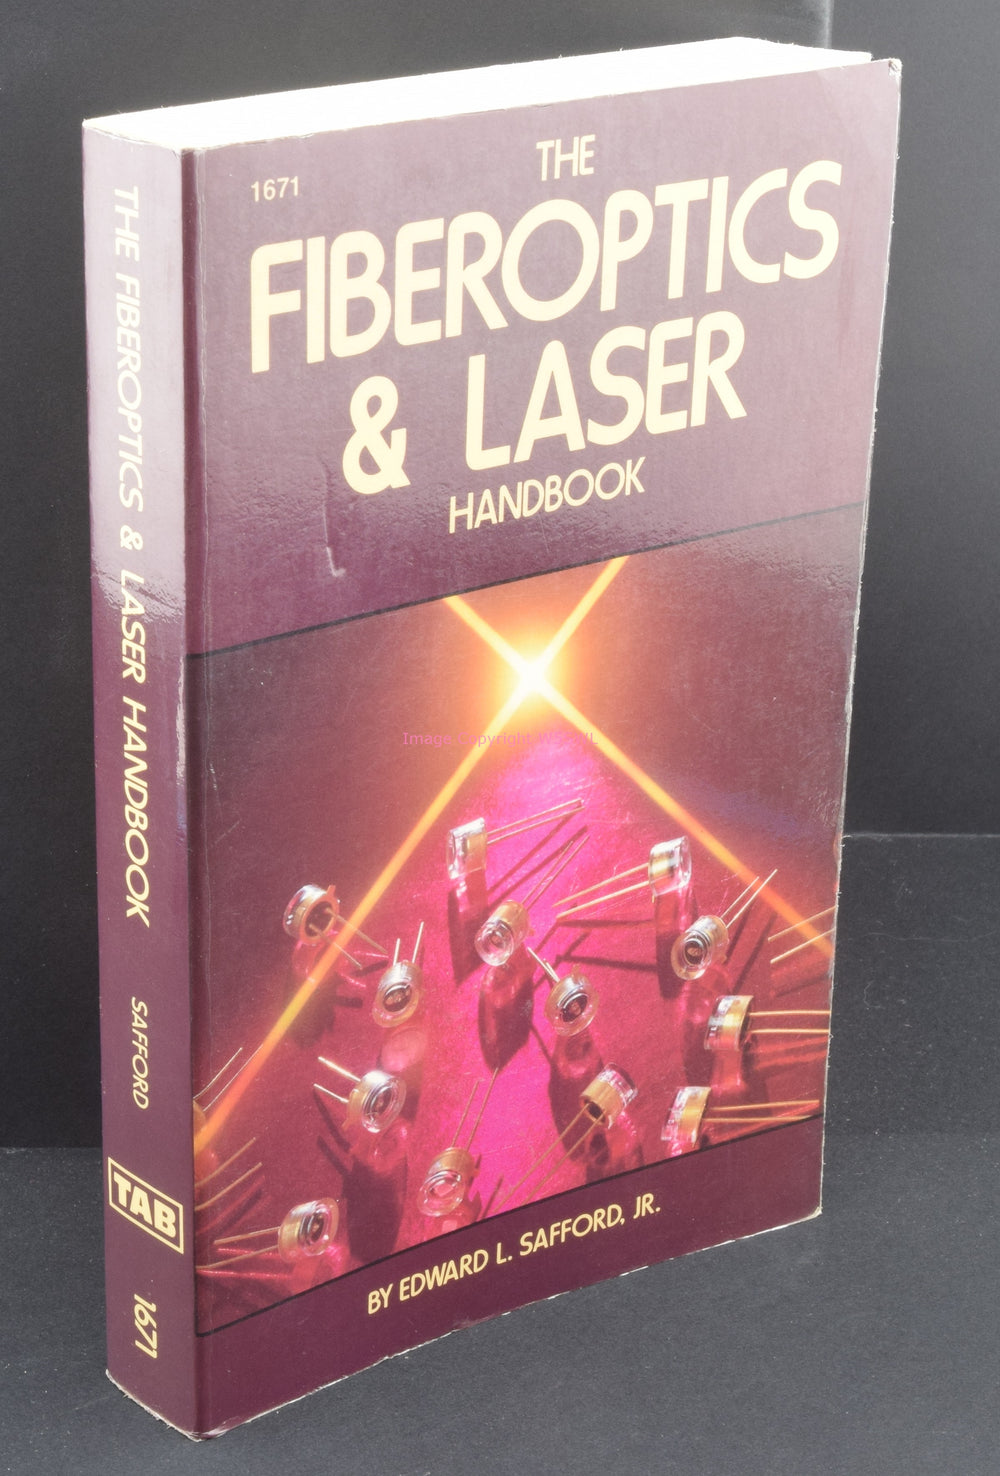 The Fiberoptics & Laser Handbook - Dave's Hobby Shop by W5SWL